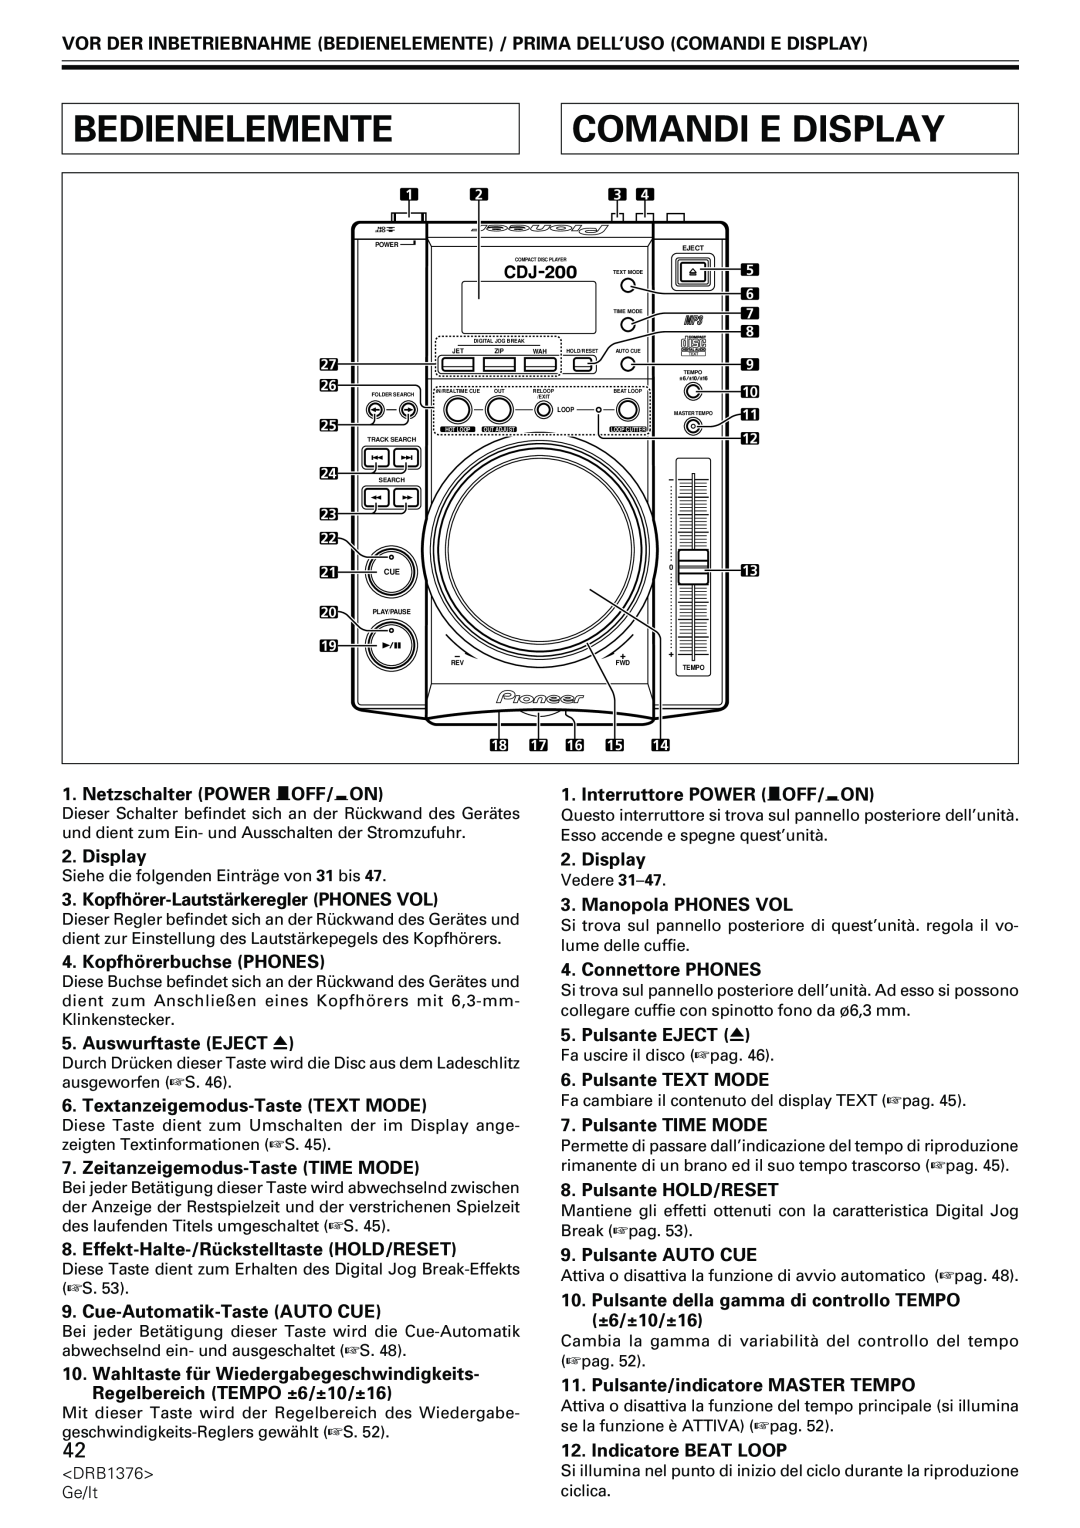 Pioneer CDJ-200 manual Bedienelemente, Comandi E Display, Netzschalter POWER —OFF/_ON, Interruttore POWER —OFF/_ON 